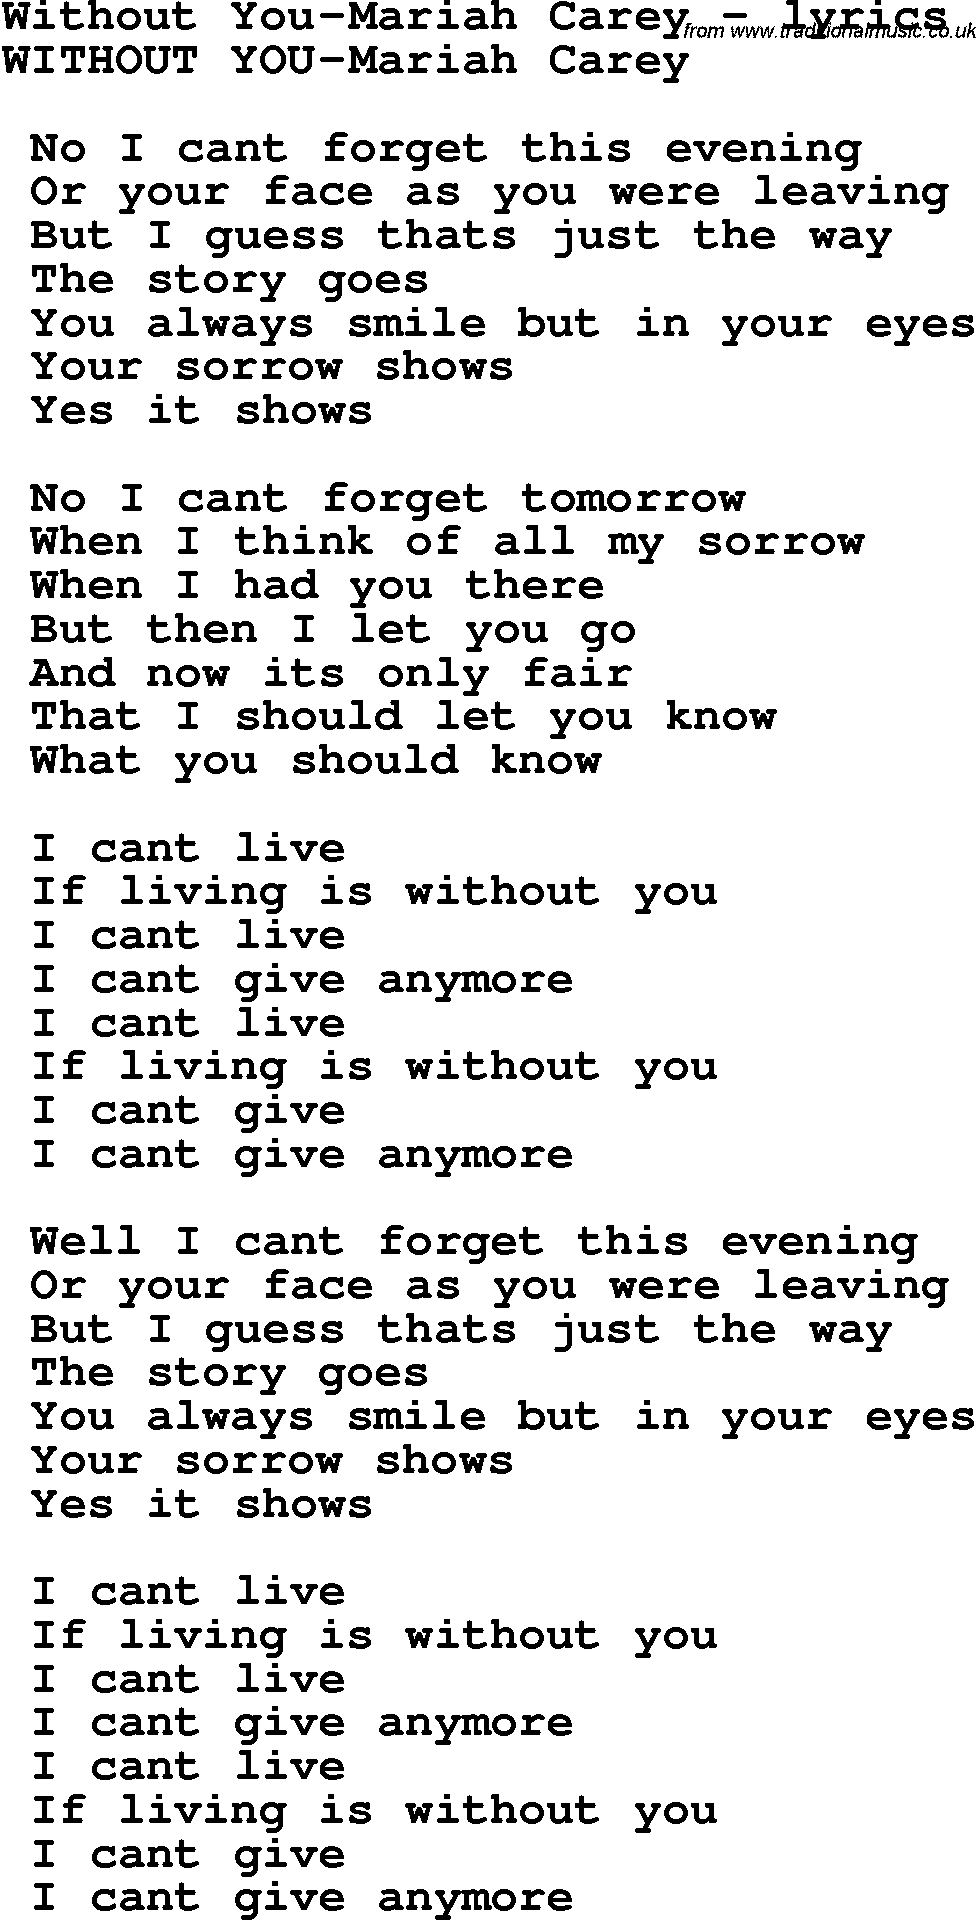 Love Song Lyrics for: Without You-Mariah Carey